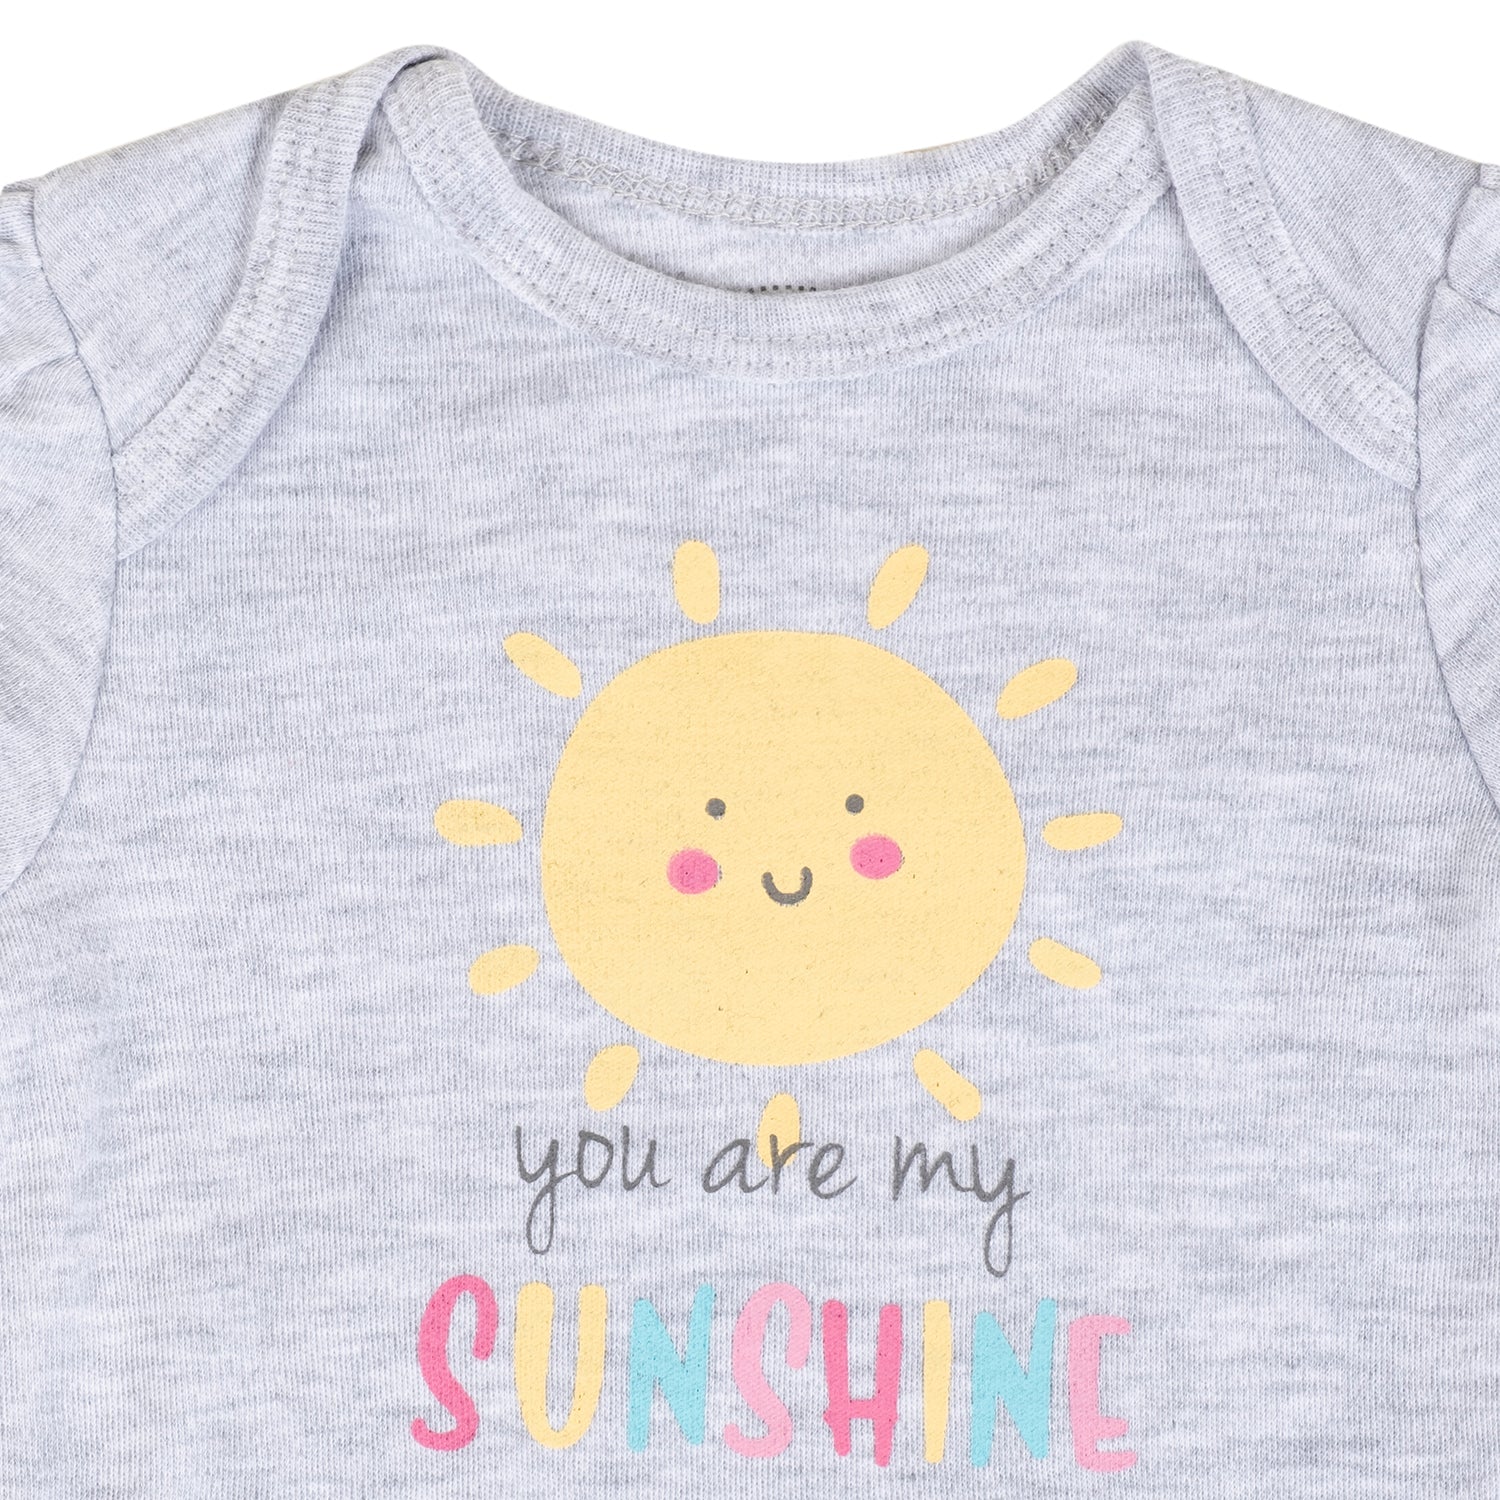 Baby Moo You Are My Sunshine Gift Set 3 Piece With Bodysuit, Tutu Skirt And Headband - Grey, Blue